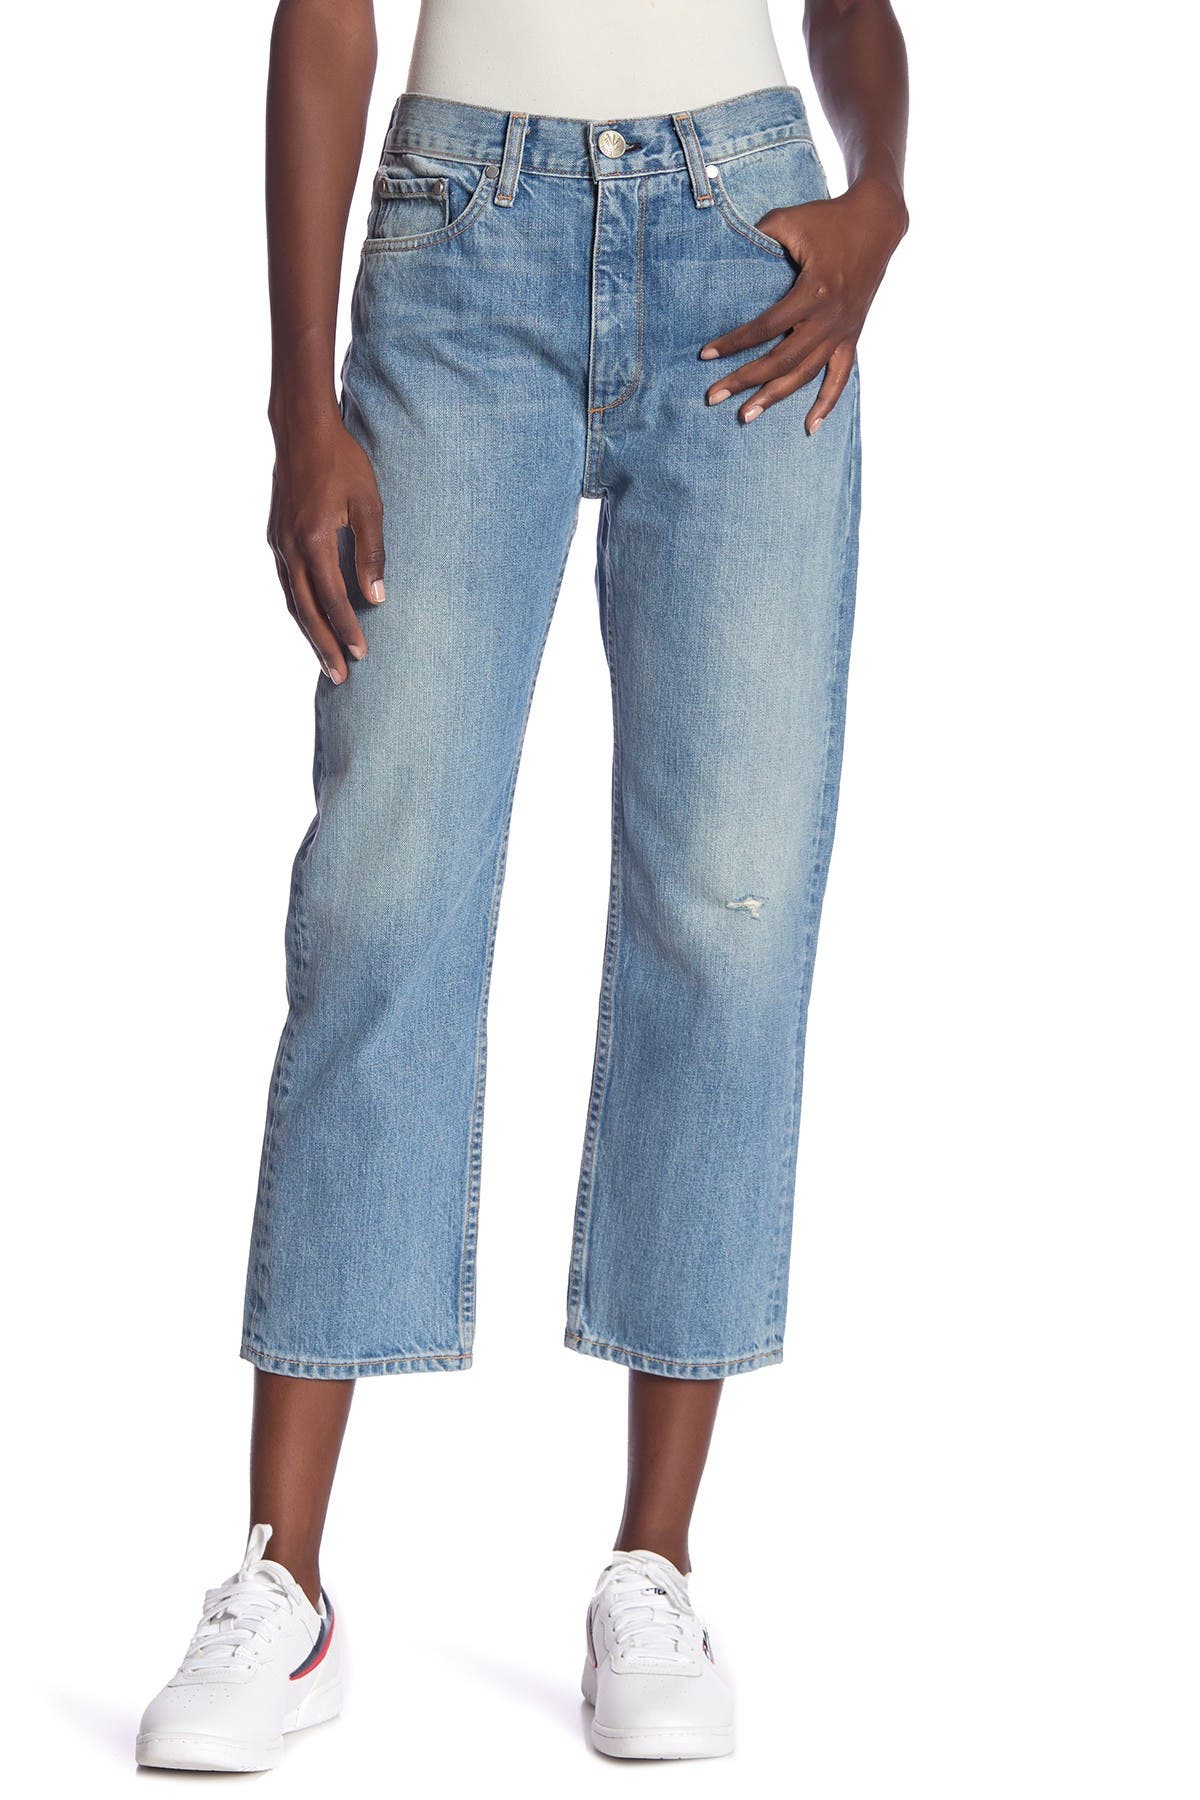 rag and bone jeans nordstrom rack